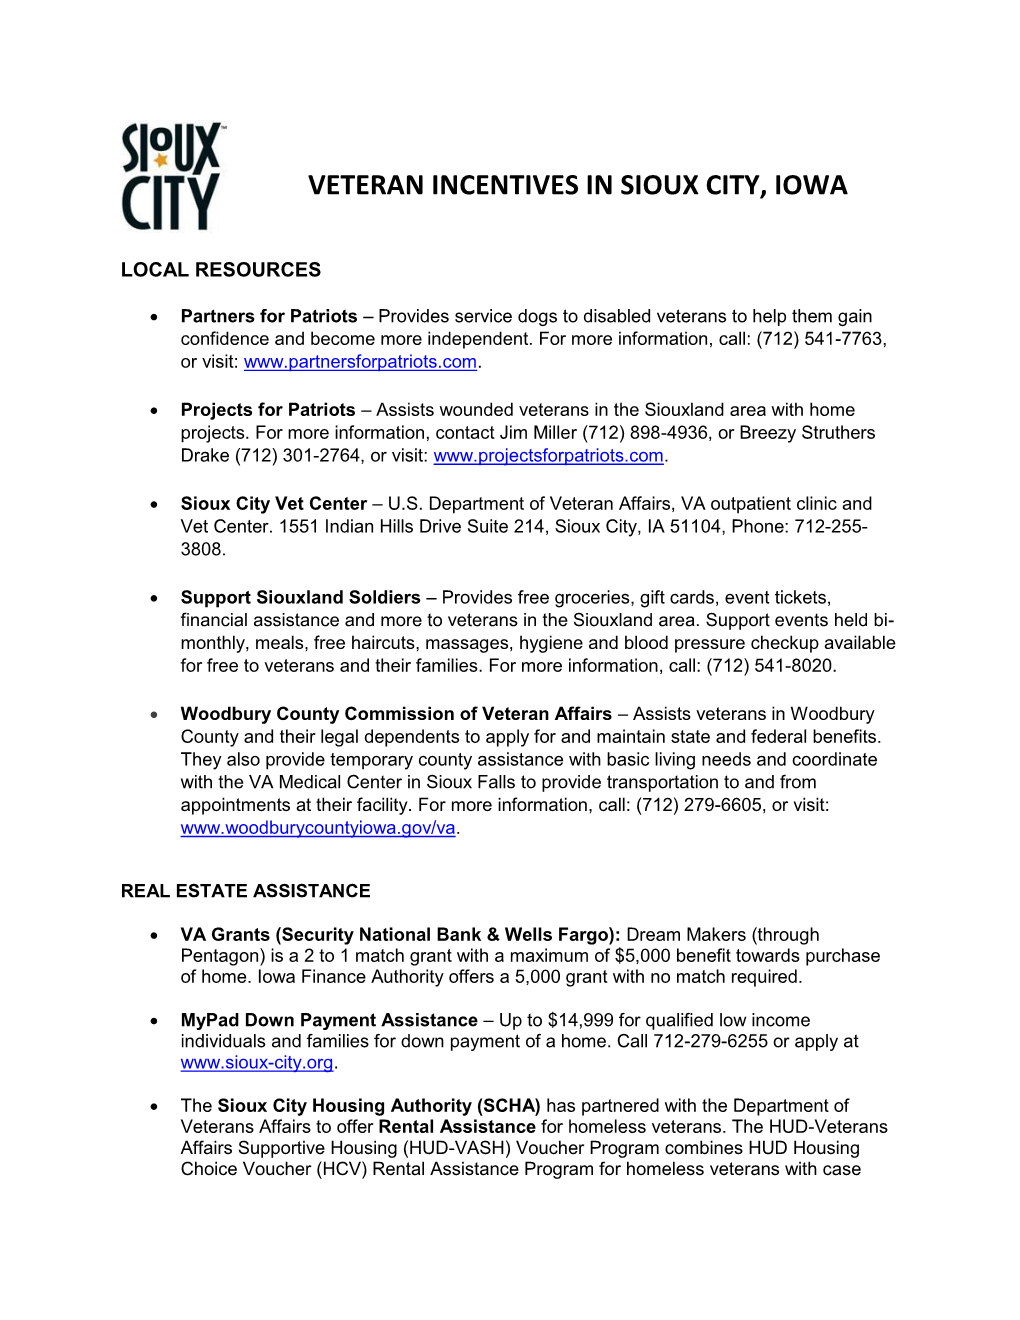 Veteran Incentives in Sioux City, Iowa